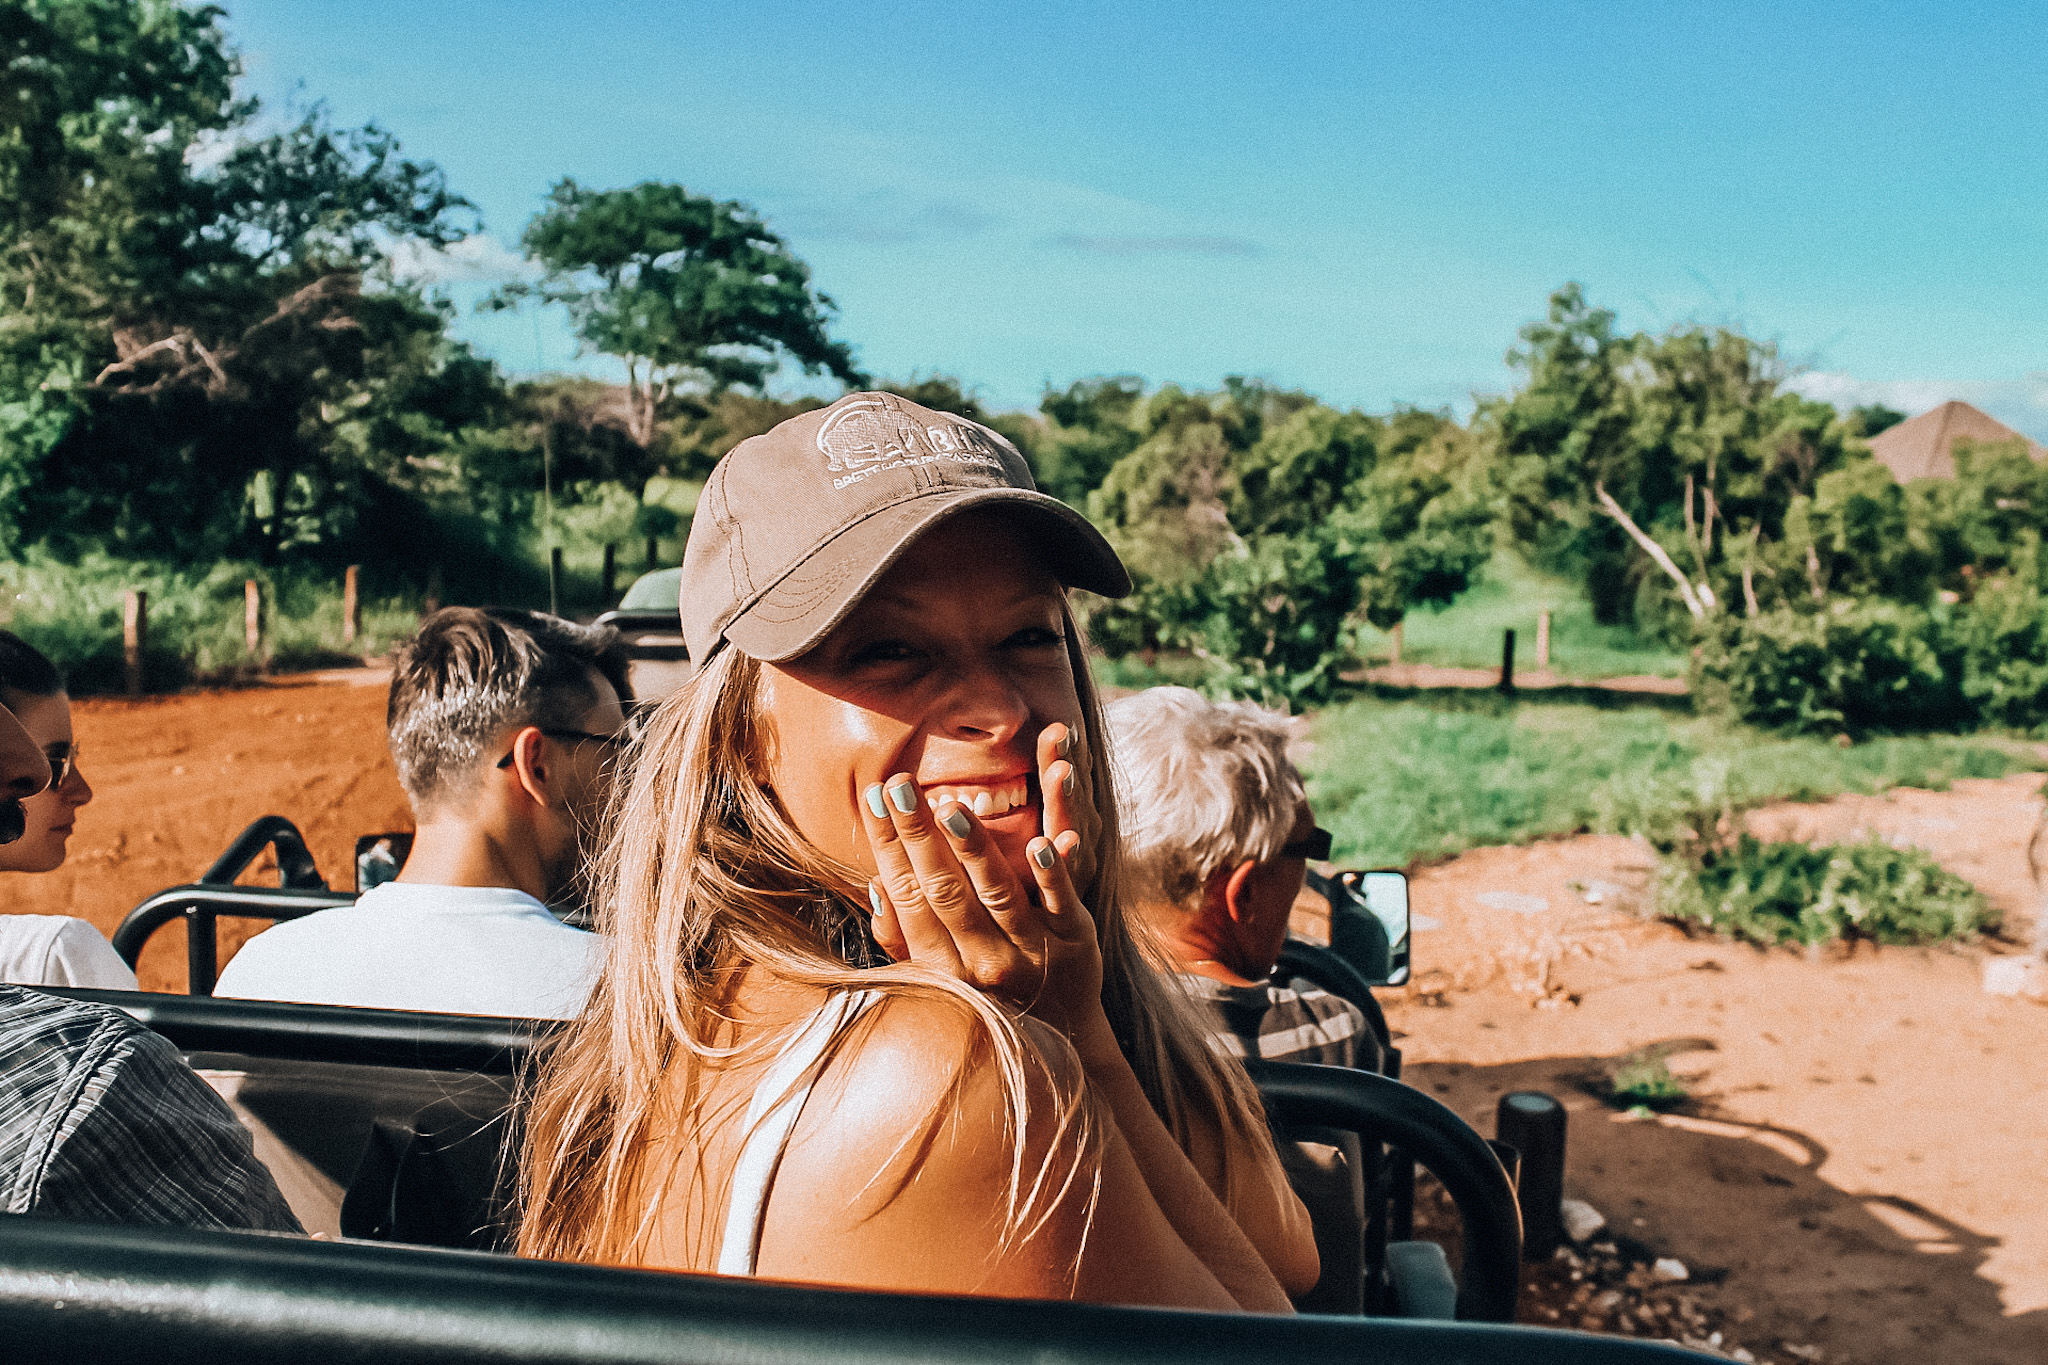 All smiles in Kruger with Brett Horley Safaris